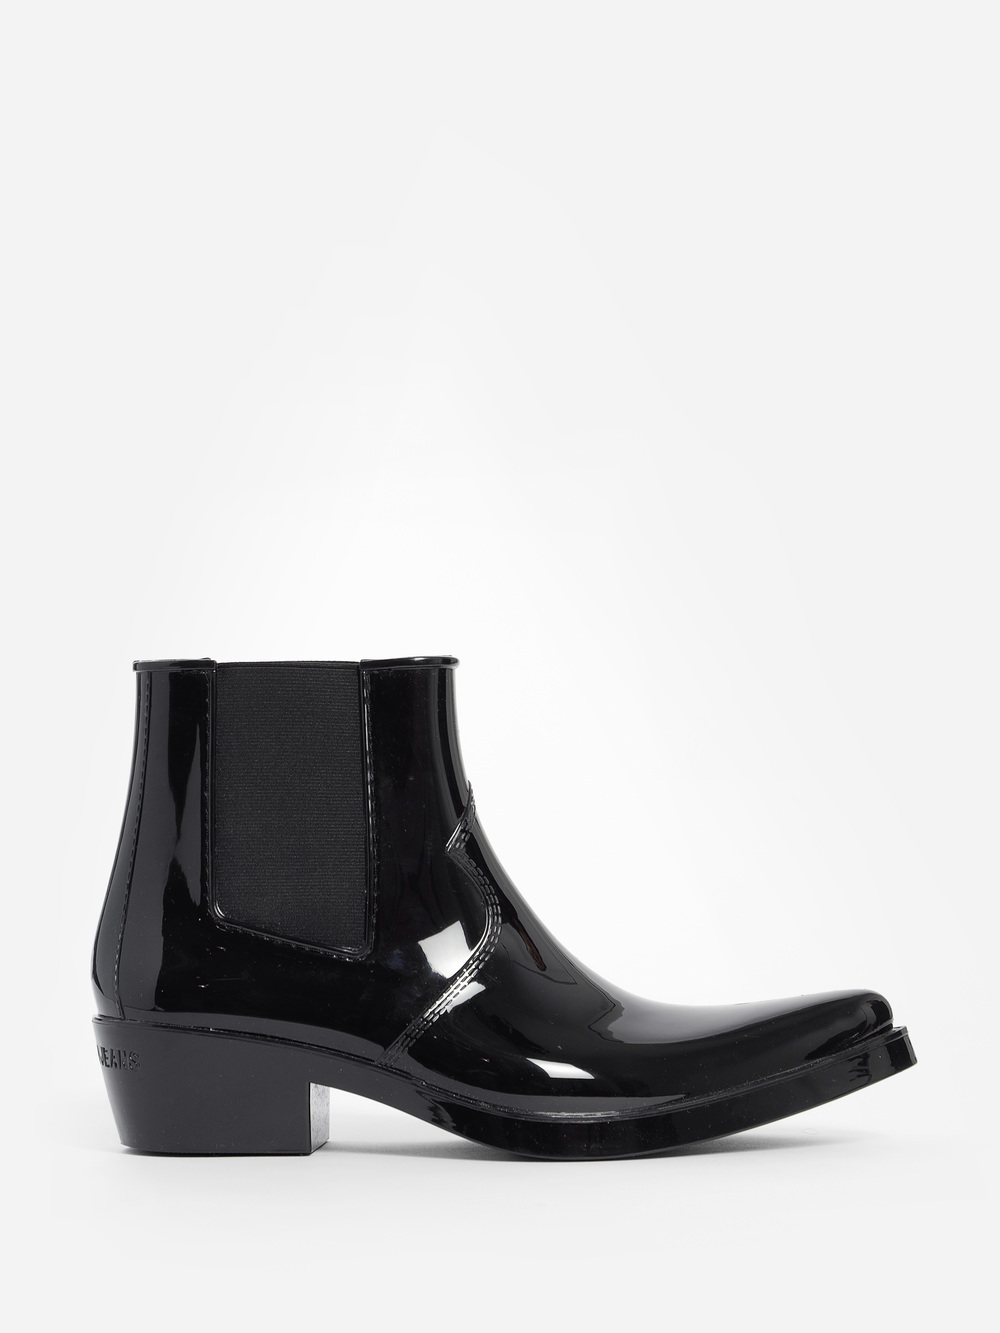 Calvin Klein 205w39nyc Men's Black Cole Rubber Boots | ModeSens